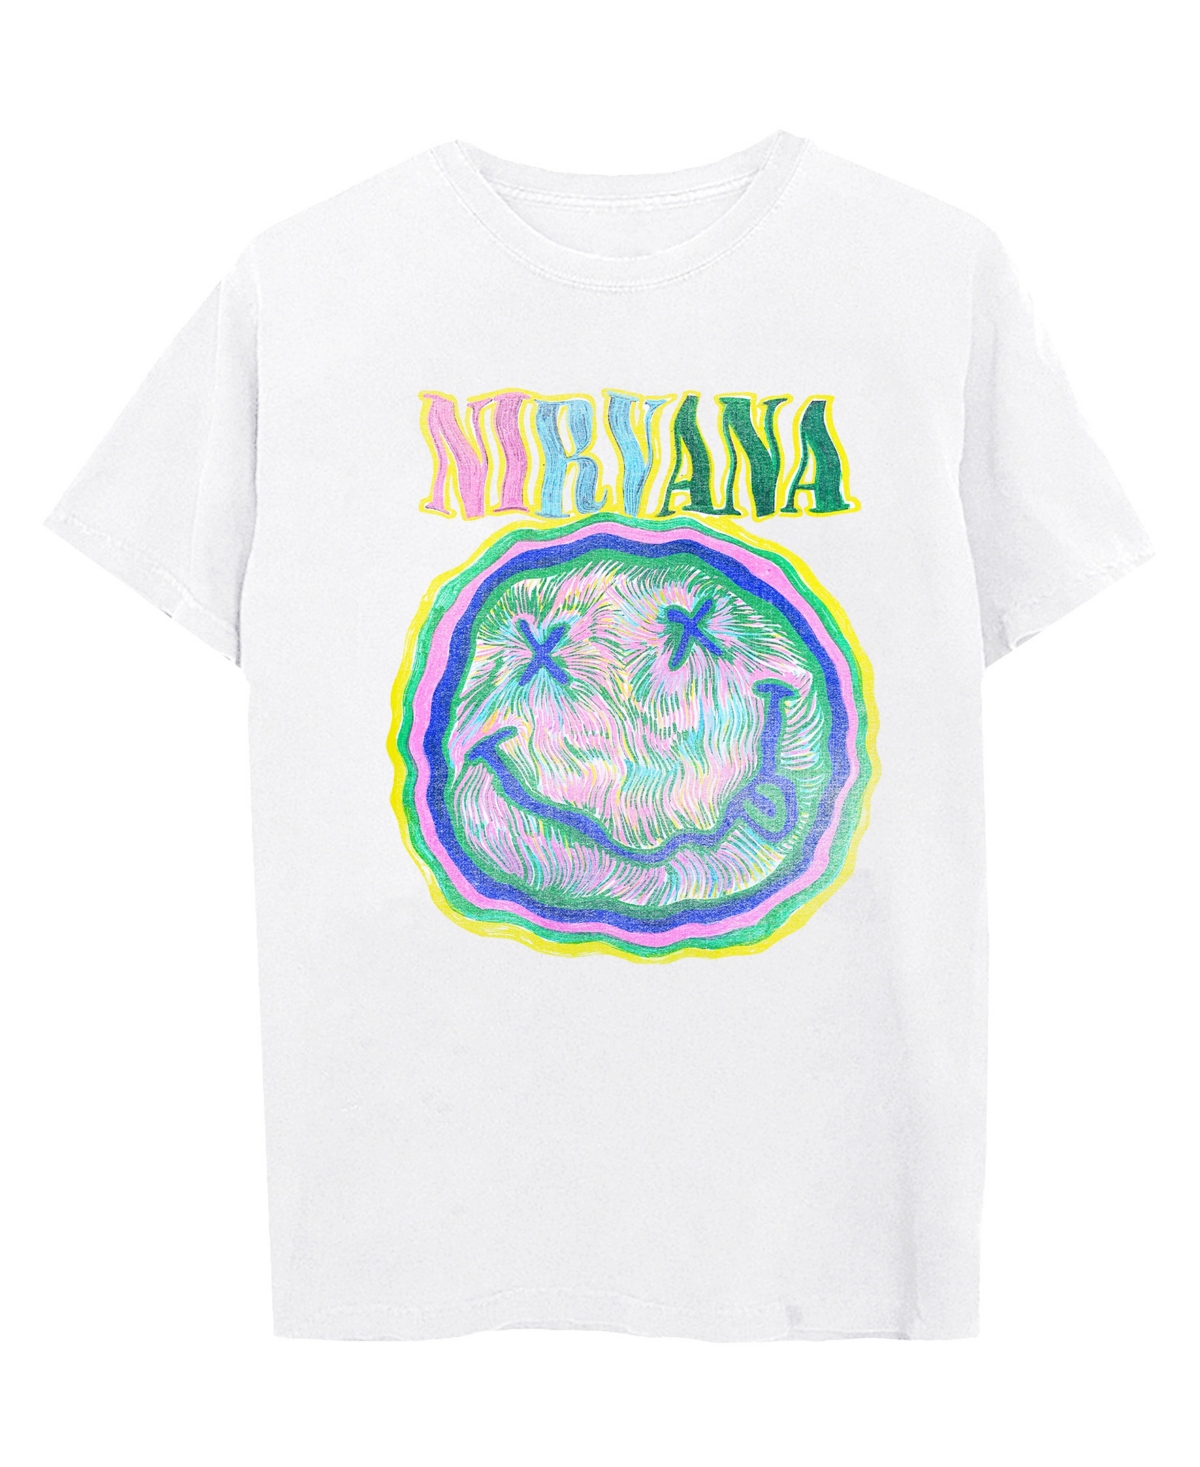 Men's Nirvana Fuzzy Smiley Short Sleeves T-shirt - White